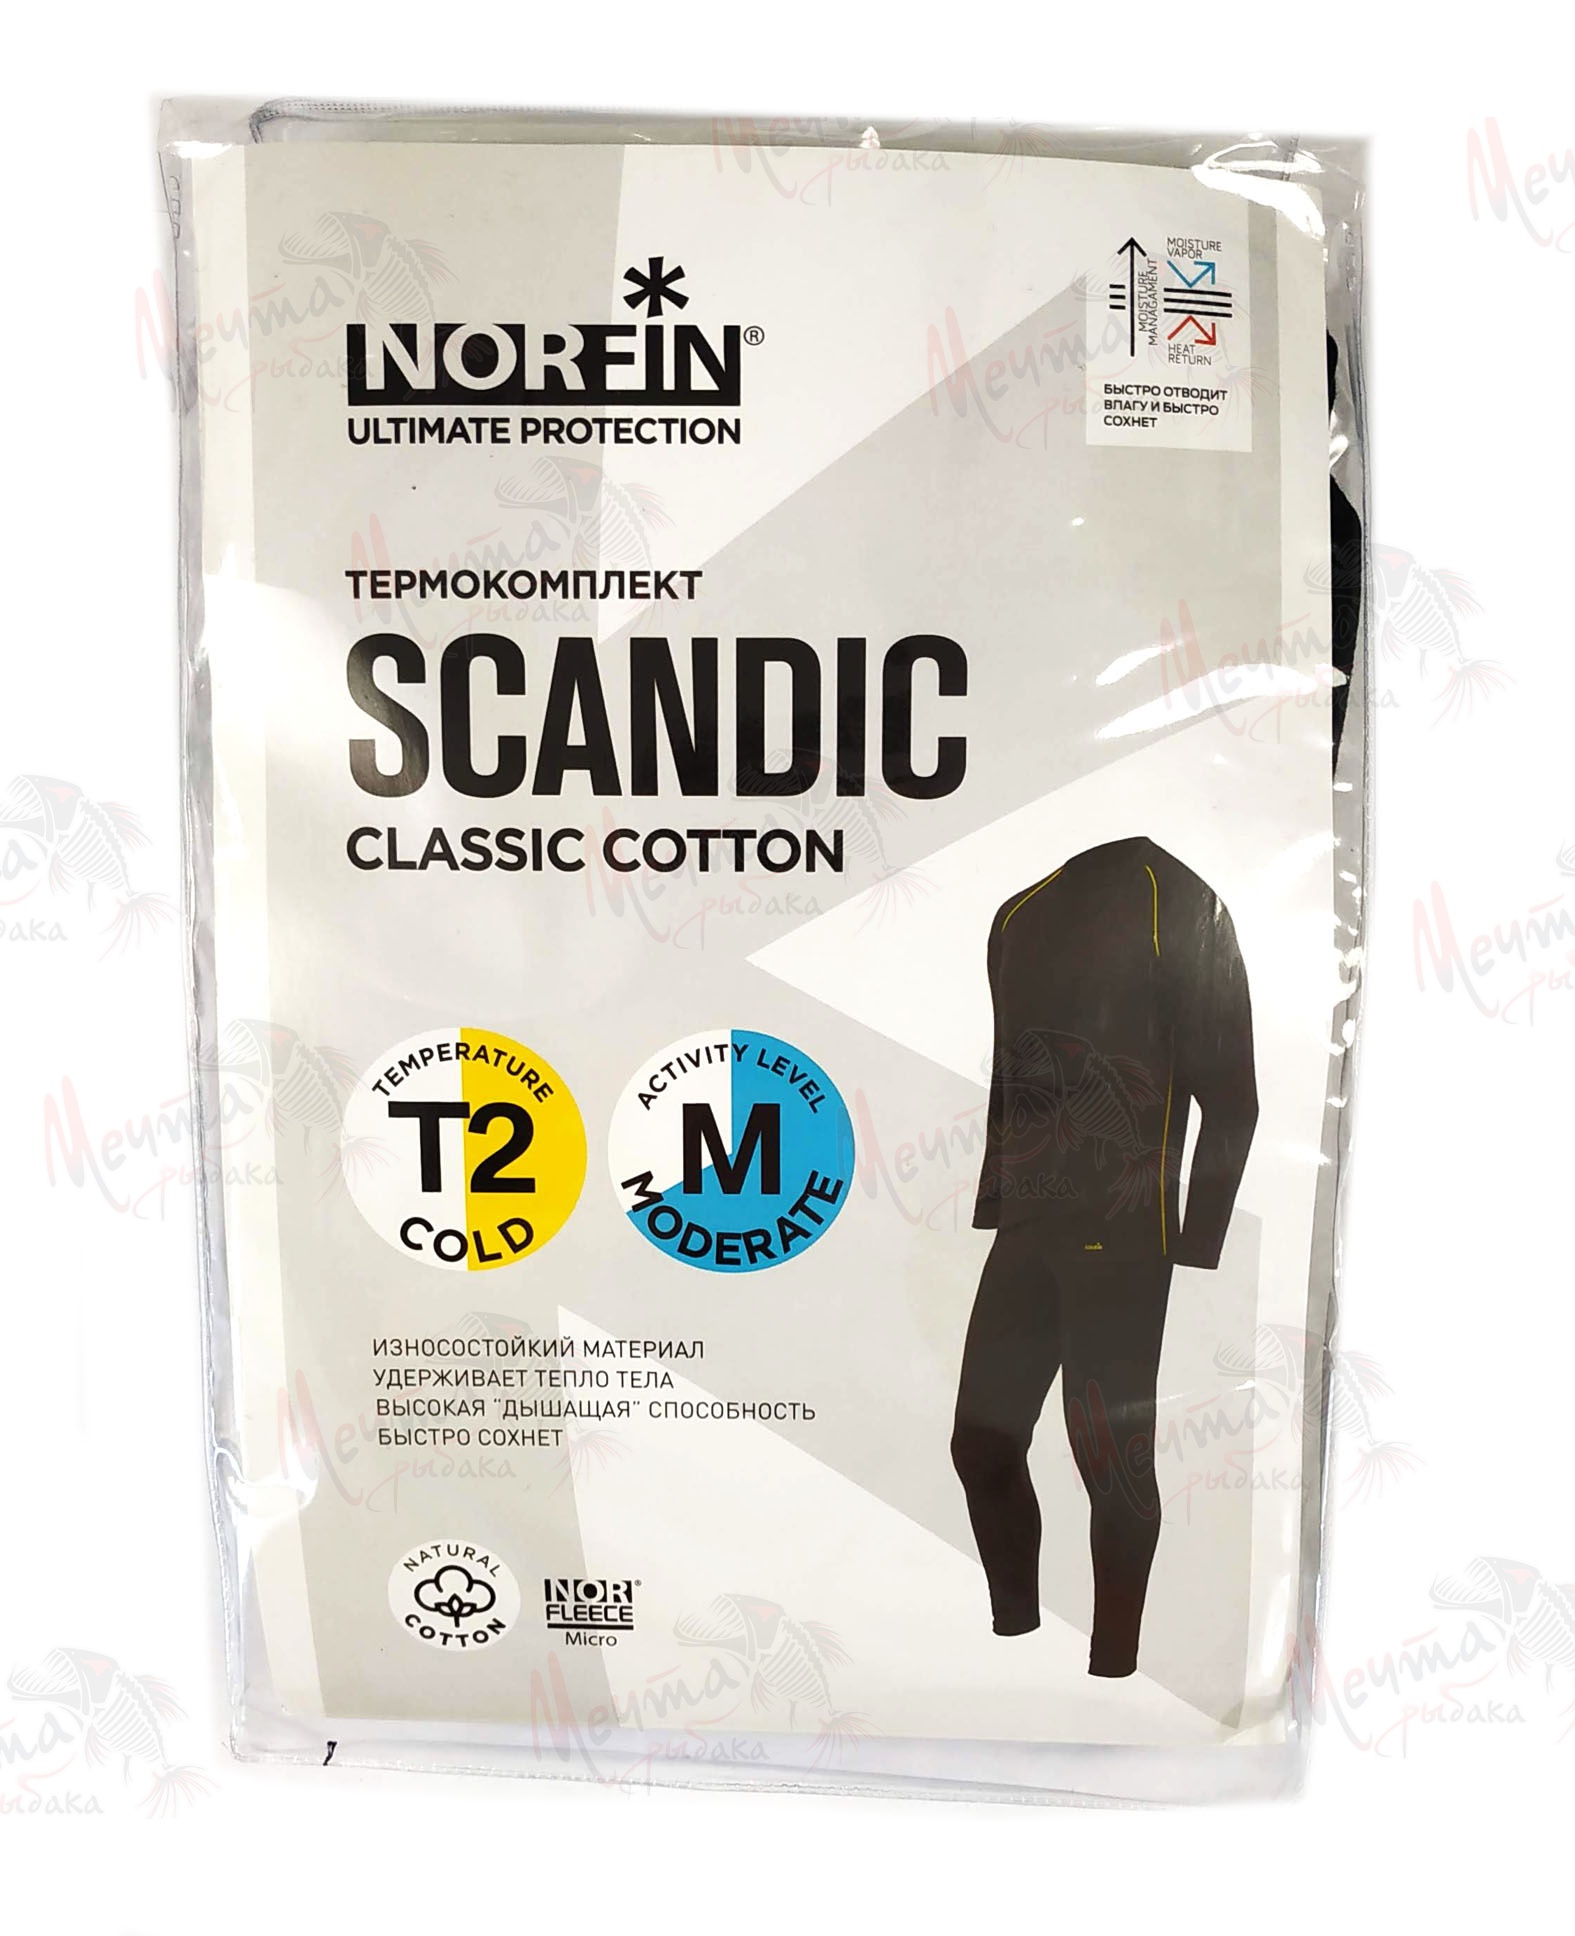 Термобелье "NORFIN" Scandic Classic Cotton